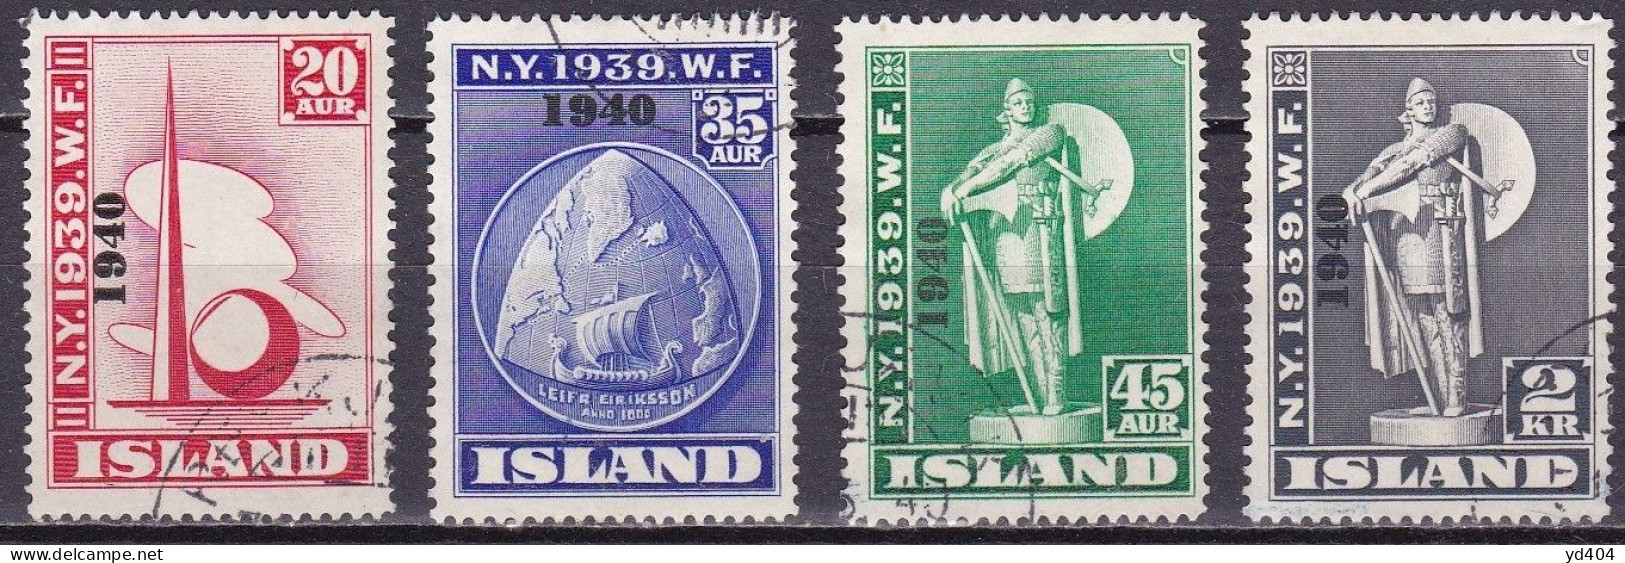 IS041 – ISLANDE – ICELAND – 1940 – NEW-YORK WORLD FAIR OVERP.– SG # 257/60 USED 680 € - Gebruikt